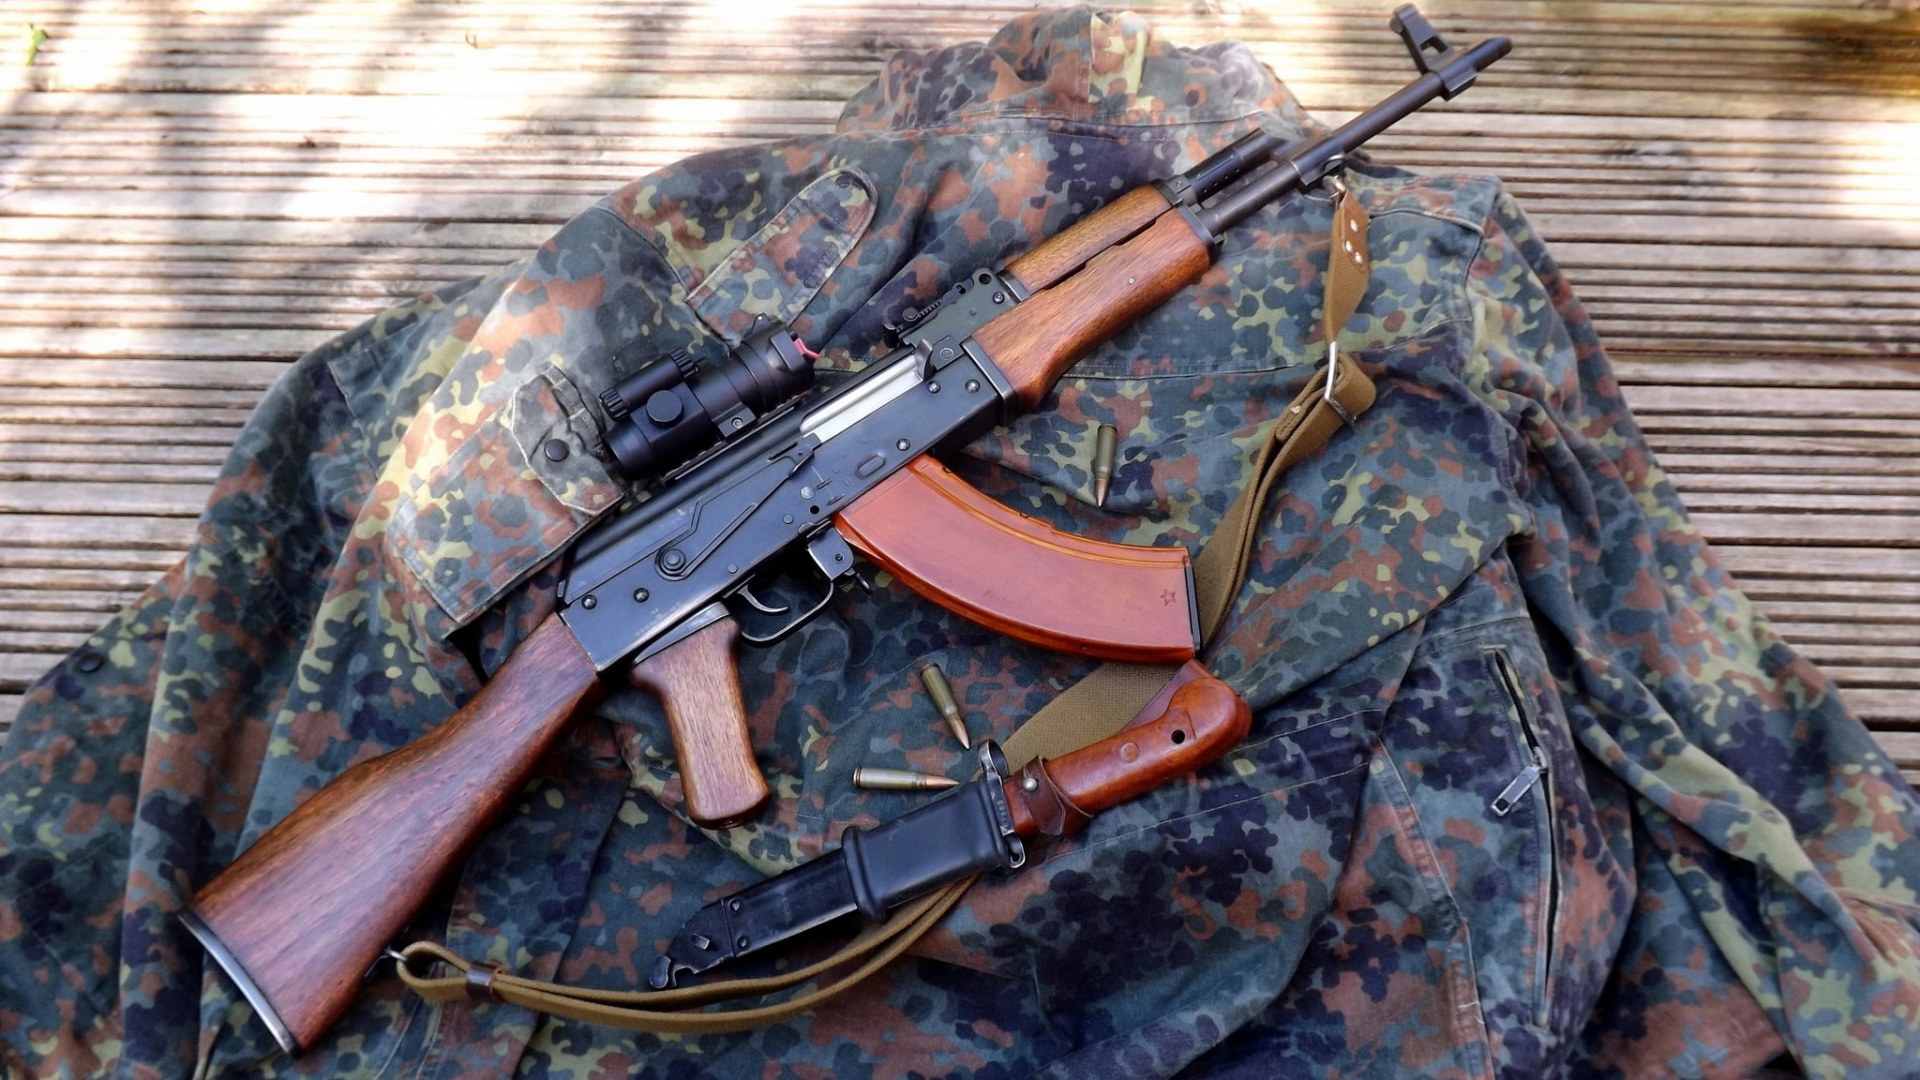 Akm, Kalashnikov Rifle, Arma, Vista, Rifle. Wallpaper in 1920x1080 Resolution